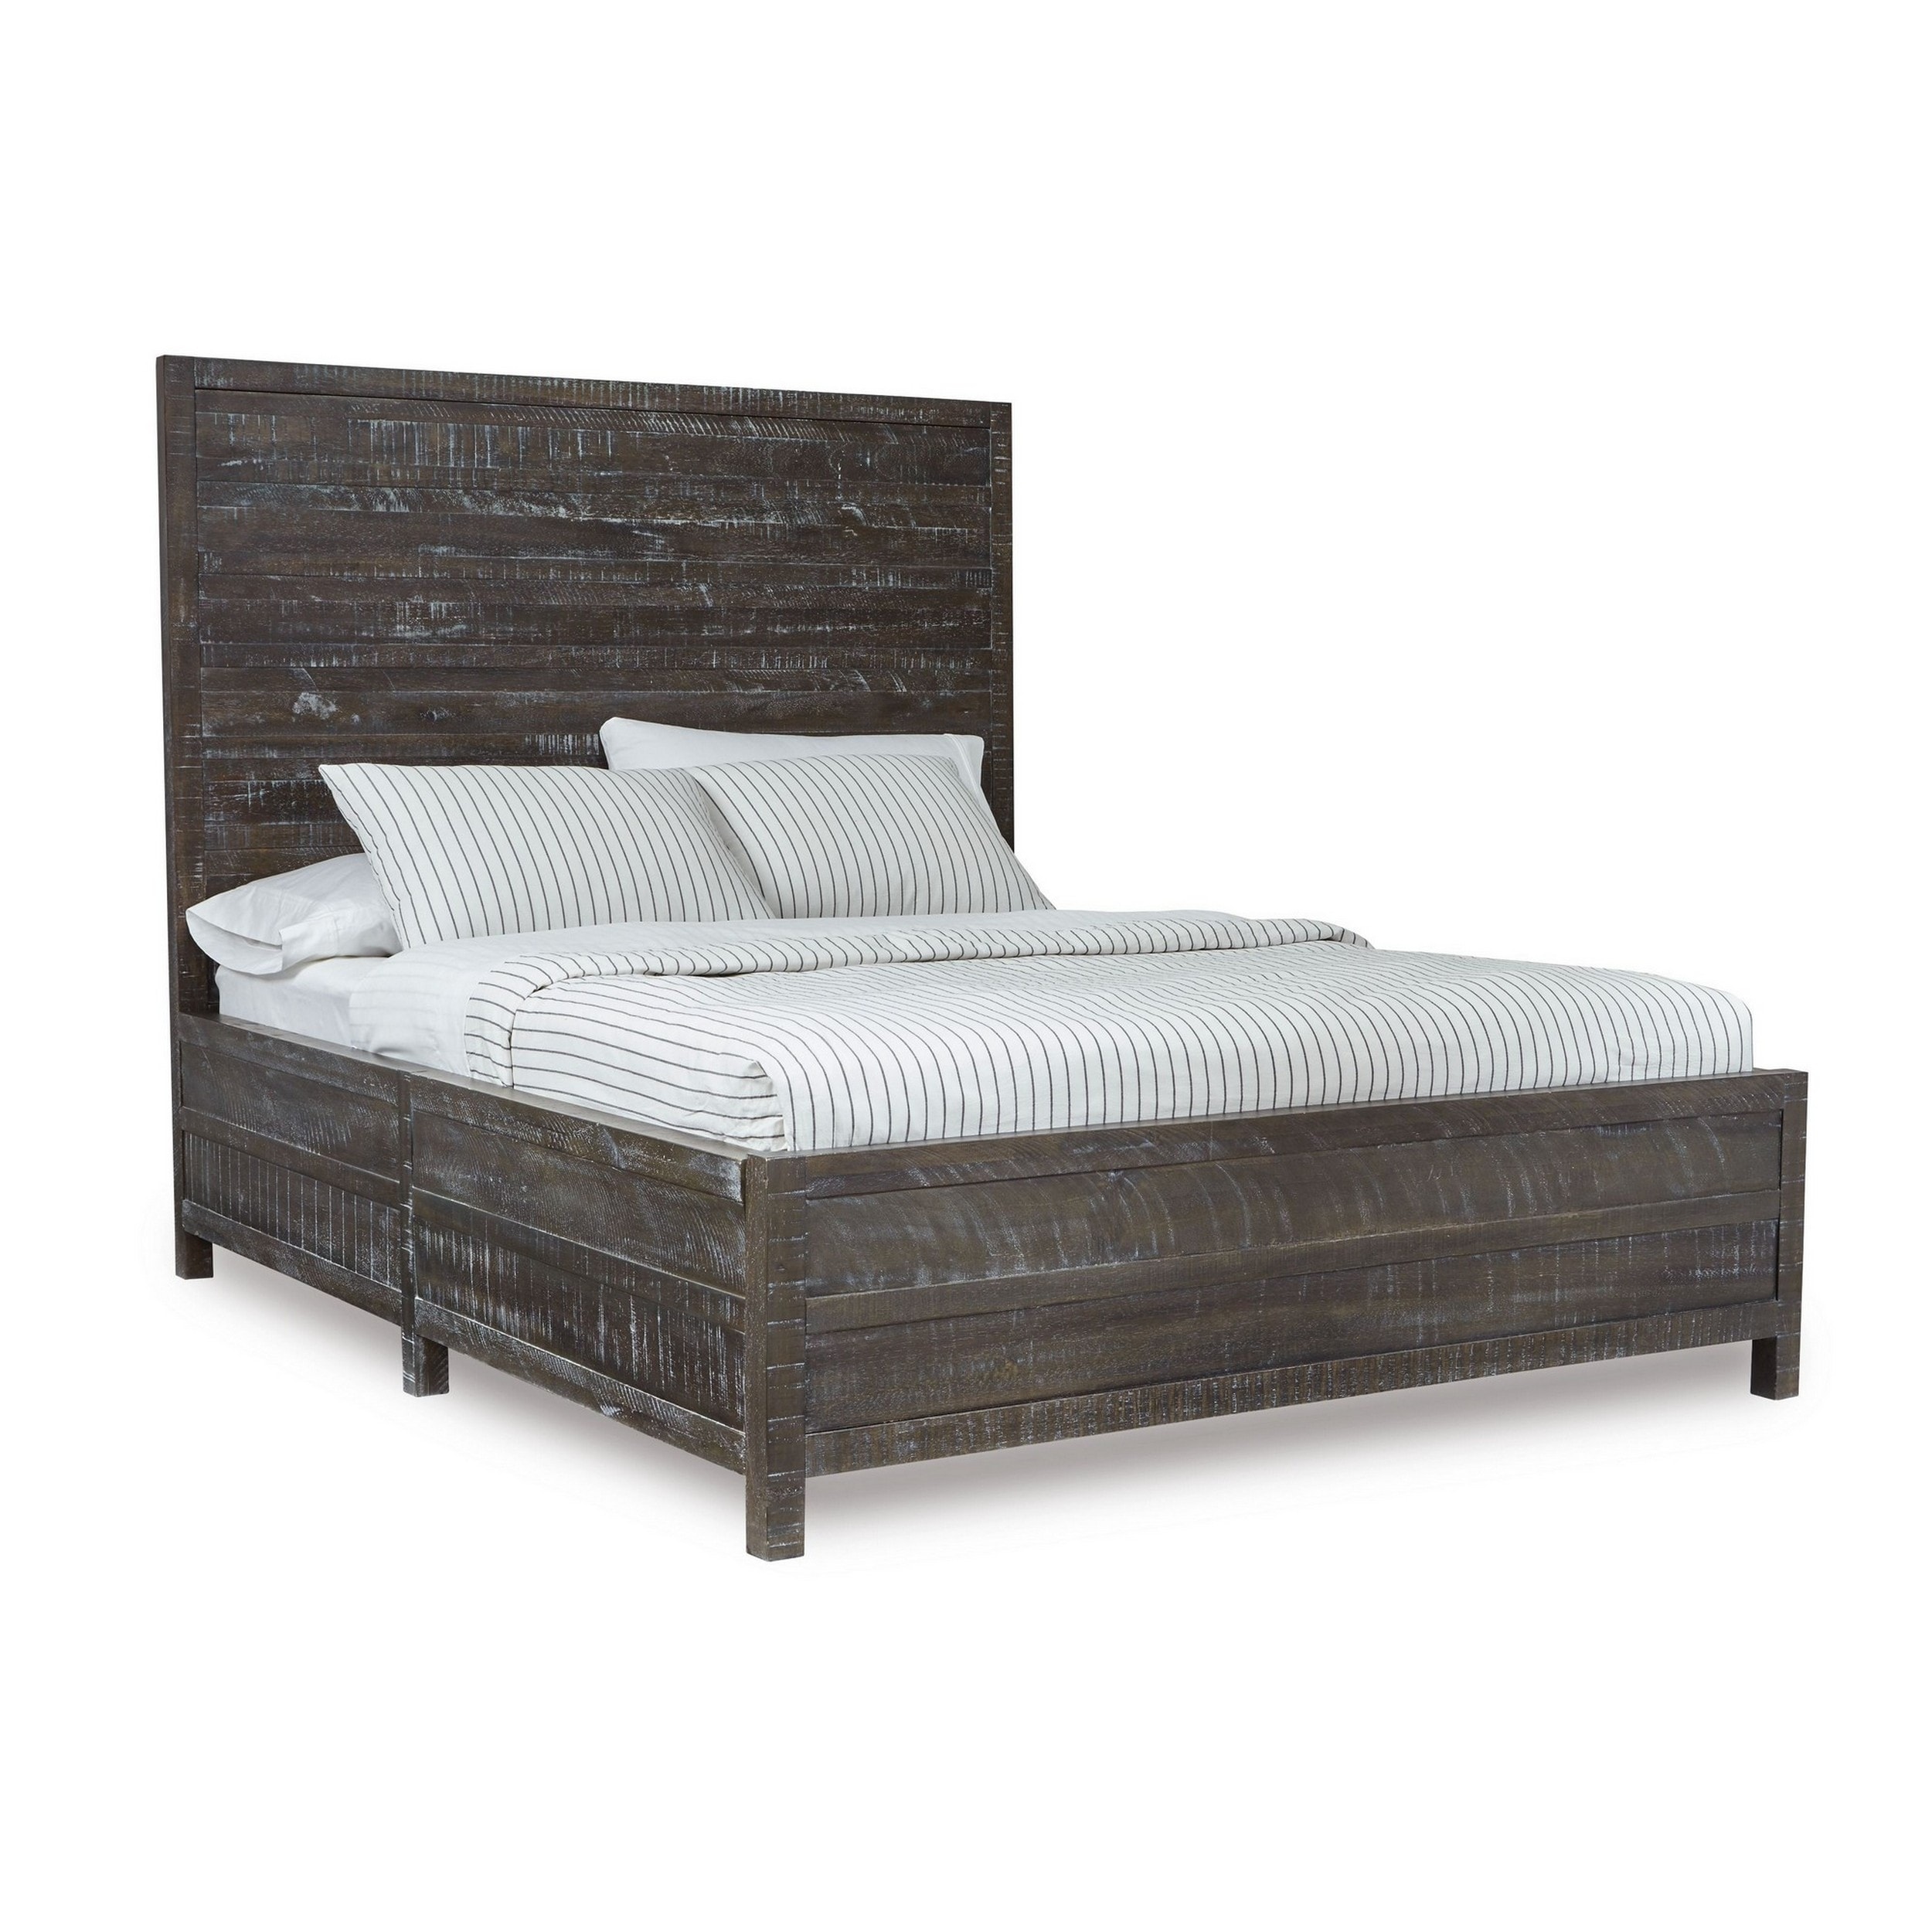 Cas California King Bed, Rustic Rough Hewn Solid Wood Planks, Dark Gray